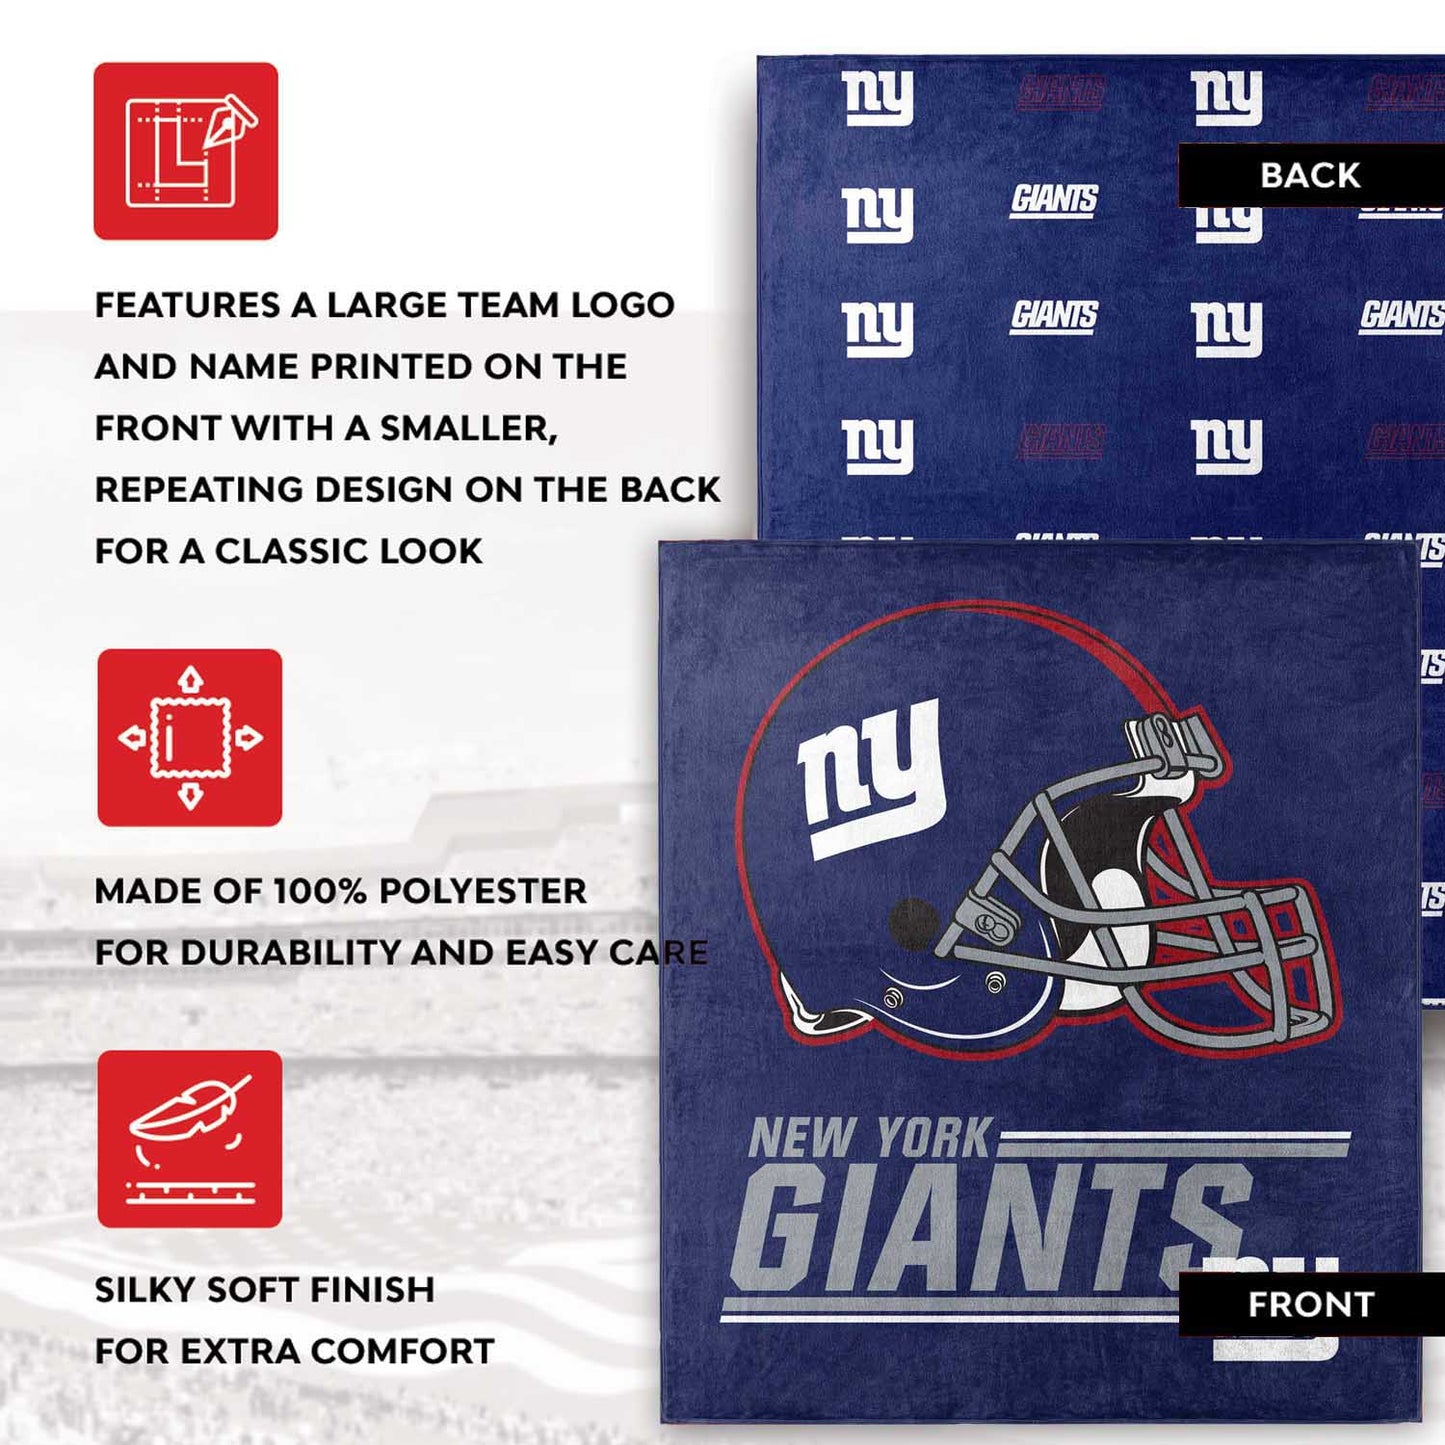 New York Giants NFL Double Sided Blanket - Royal